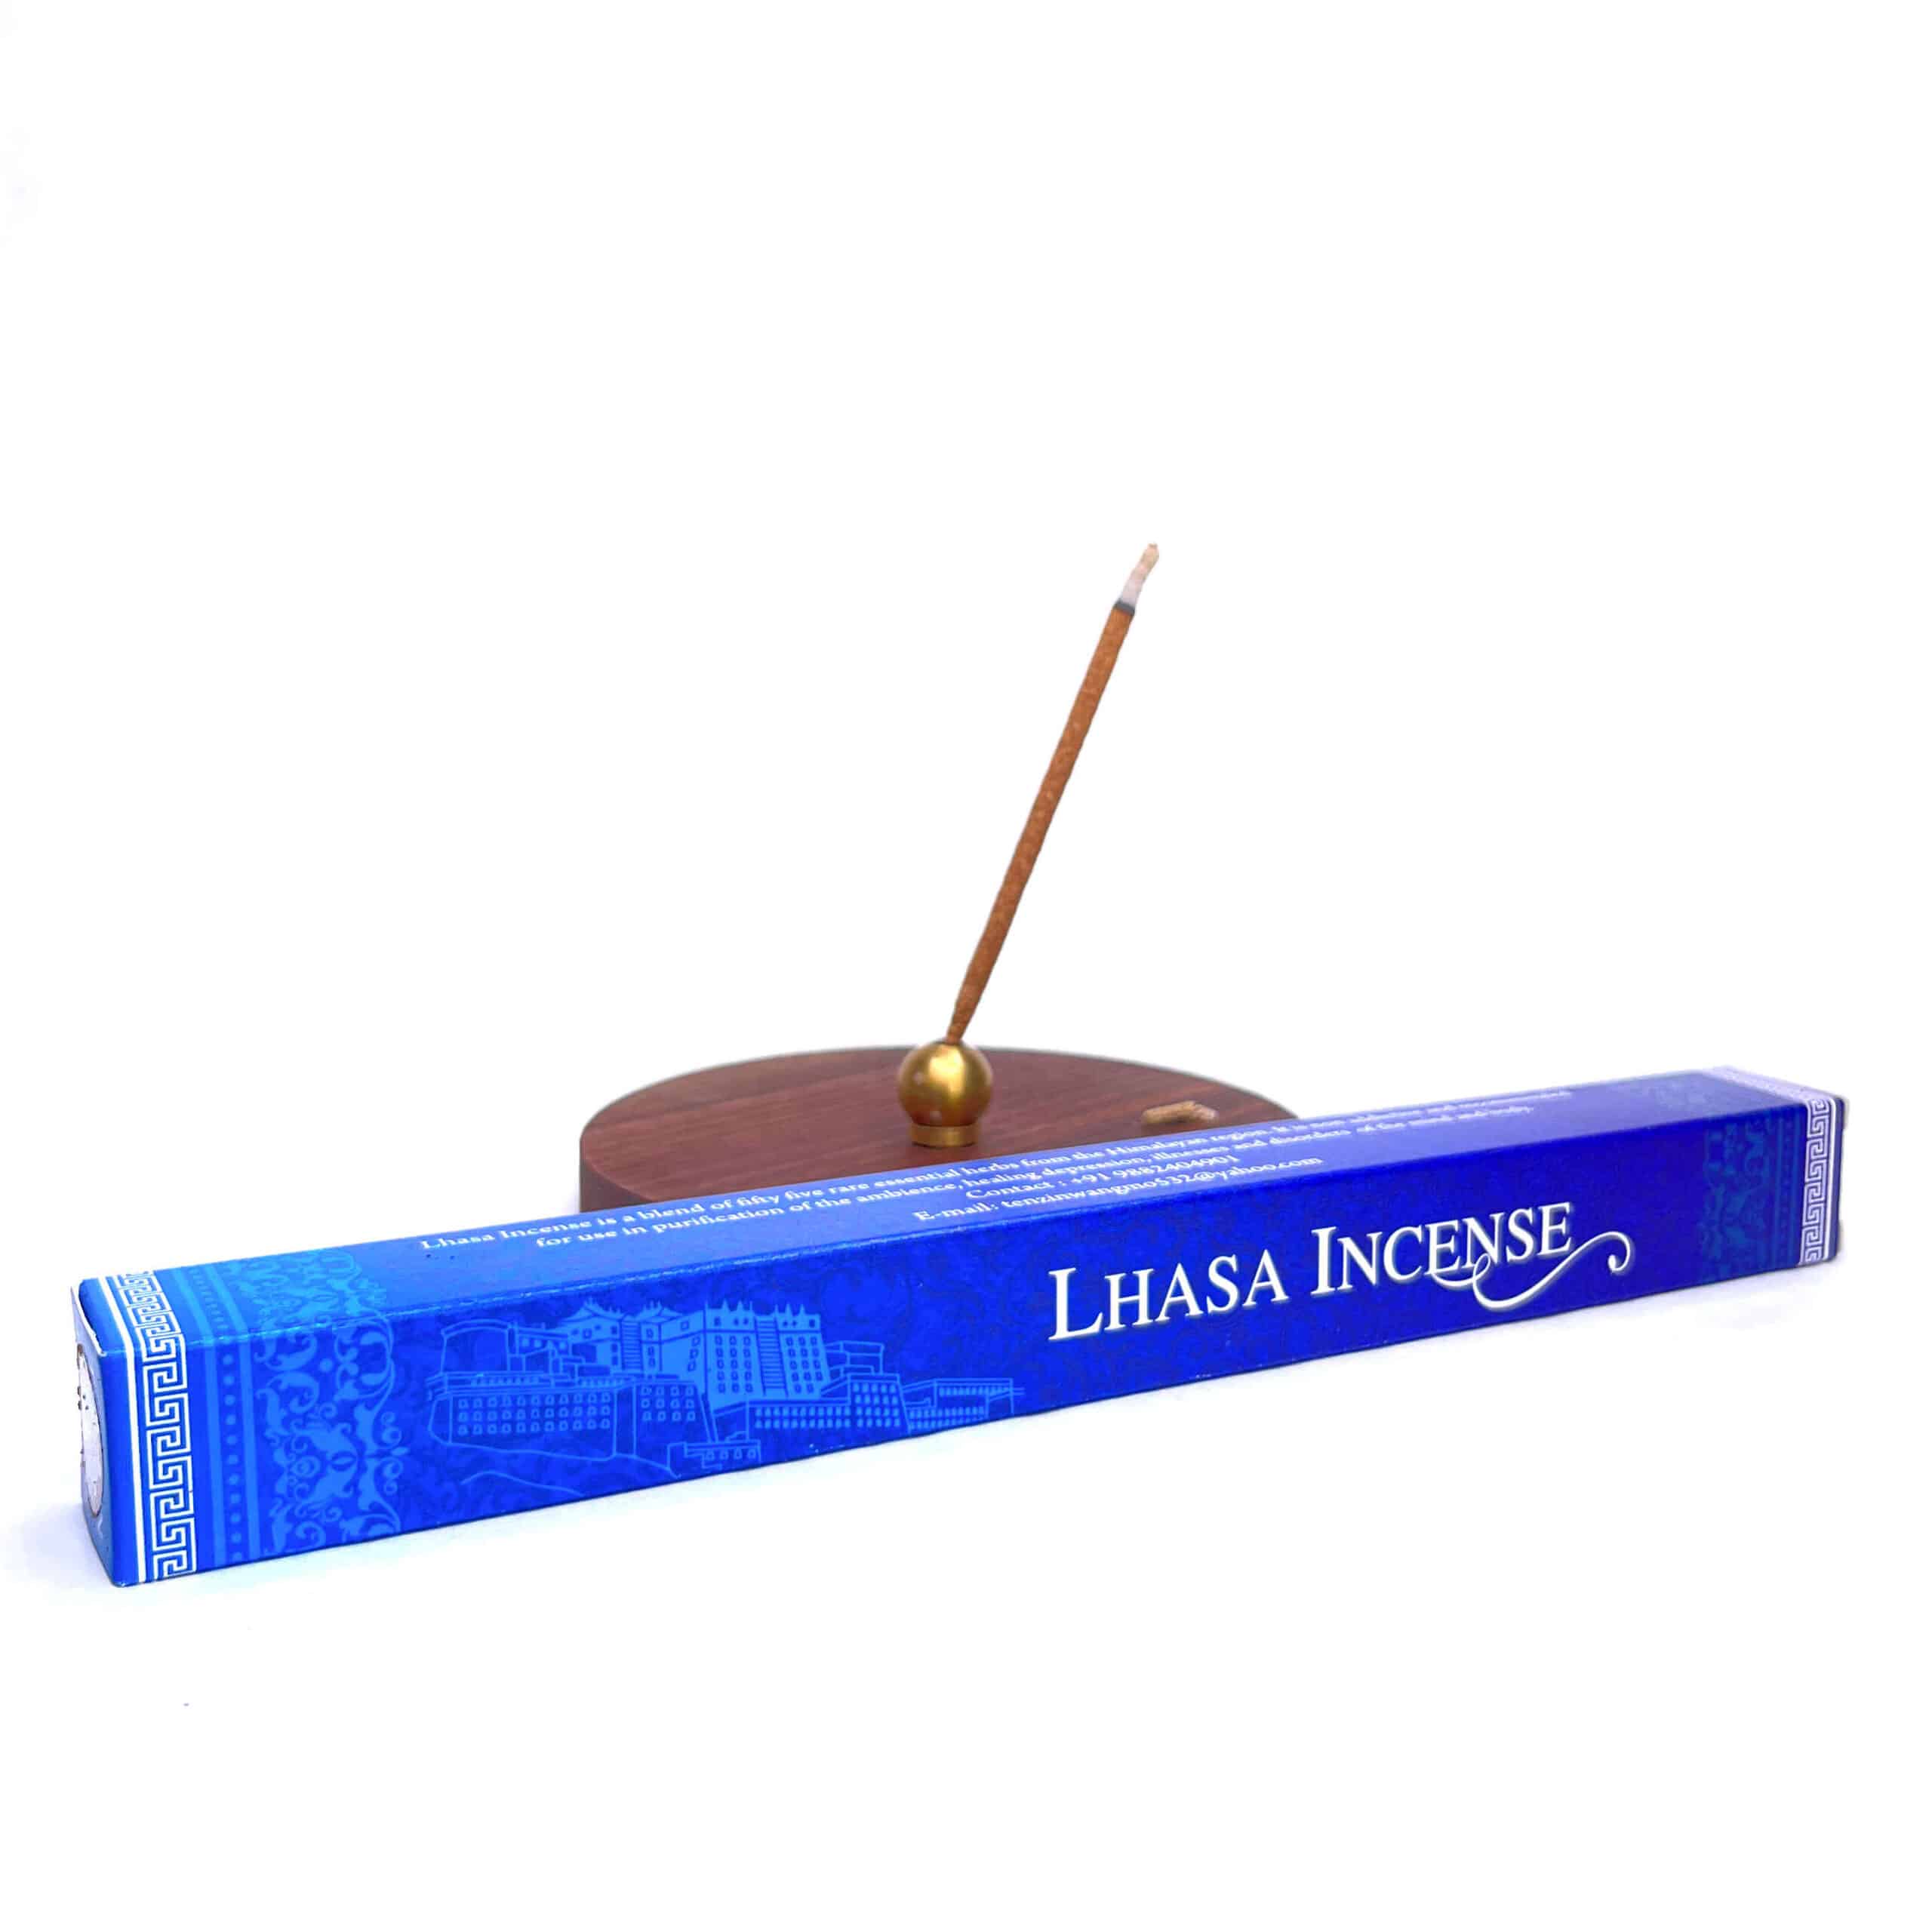 Lhasa Incense